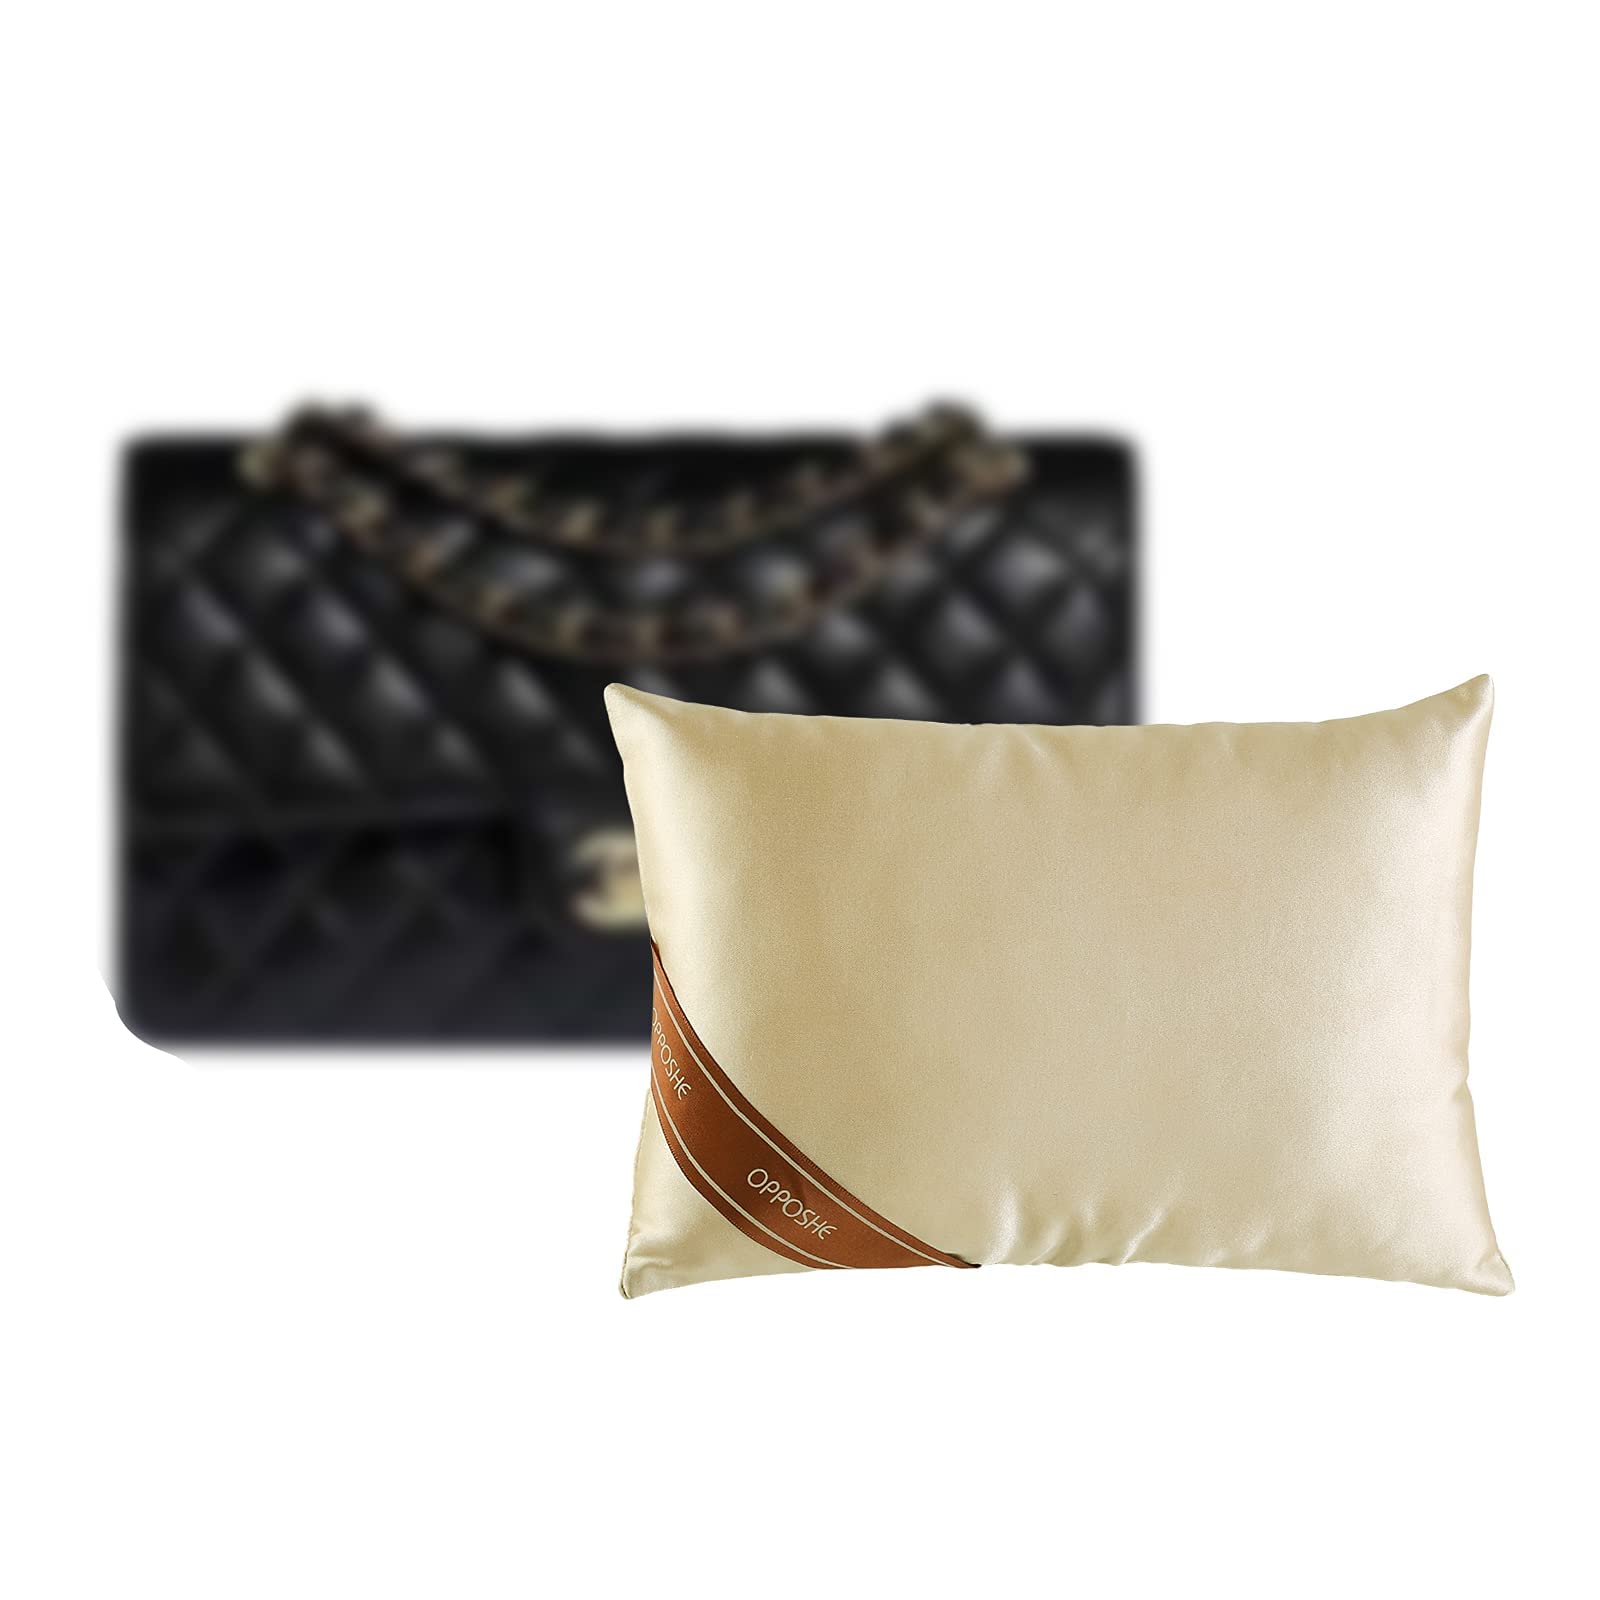 For Small Classic Handbag/Boy Chanel Handbag/Onthego PM